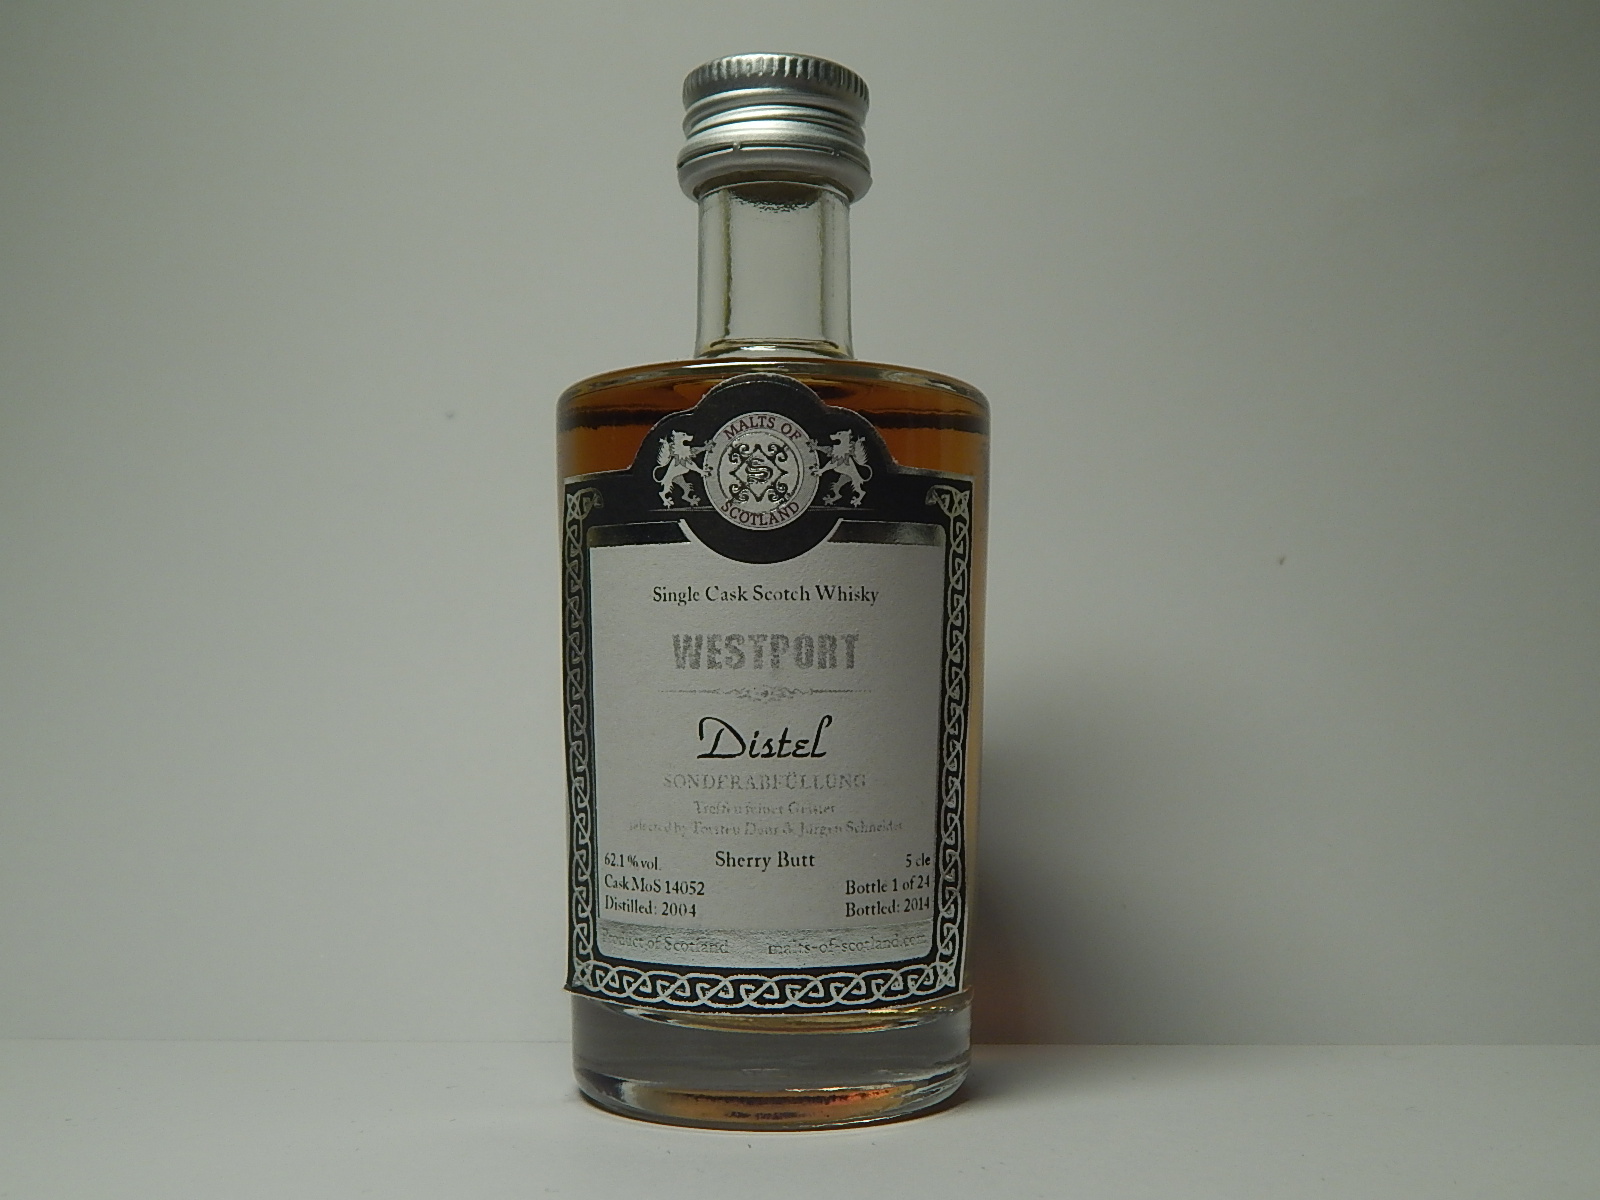 WESTPORT DISTEL Sherry Butt SCSW 10yo 2004-2014 "Malts of Scotland" 5cle 62,1%vol. 